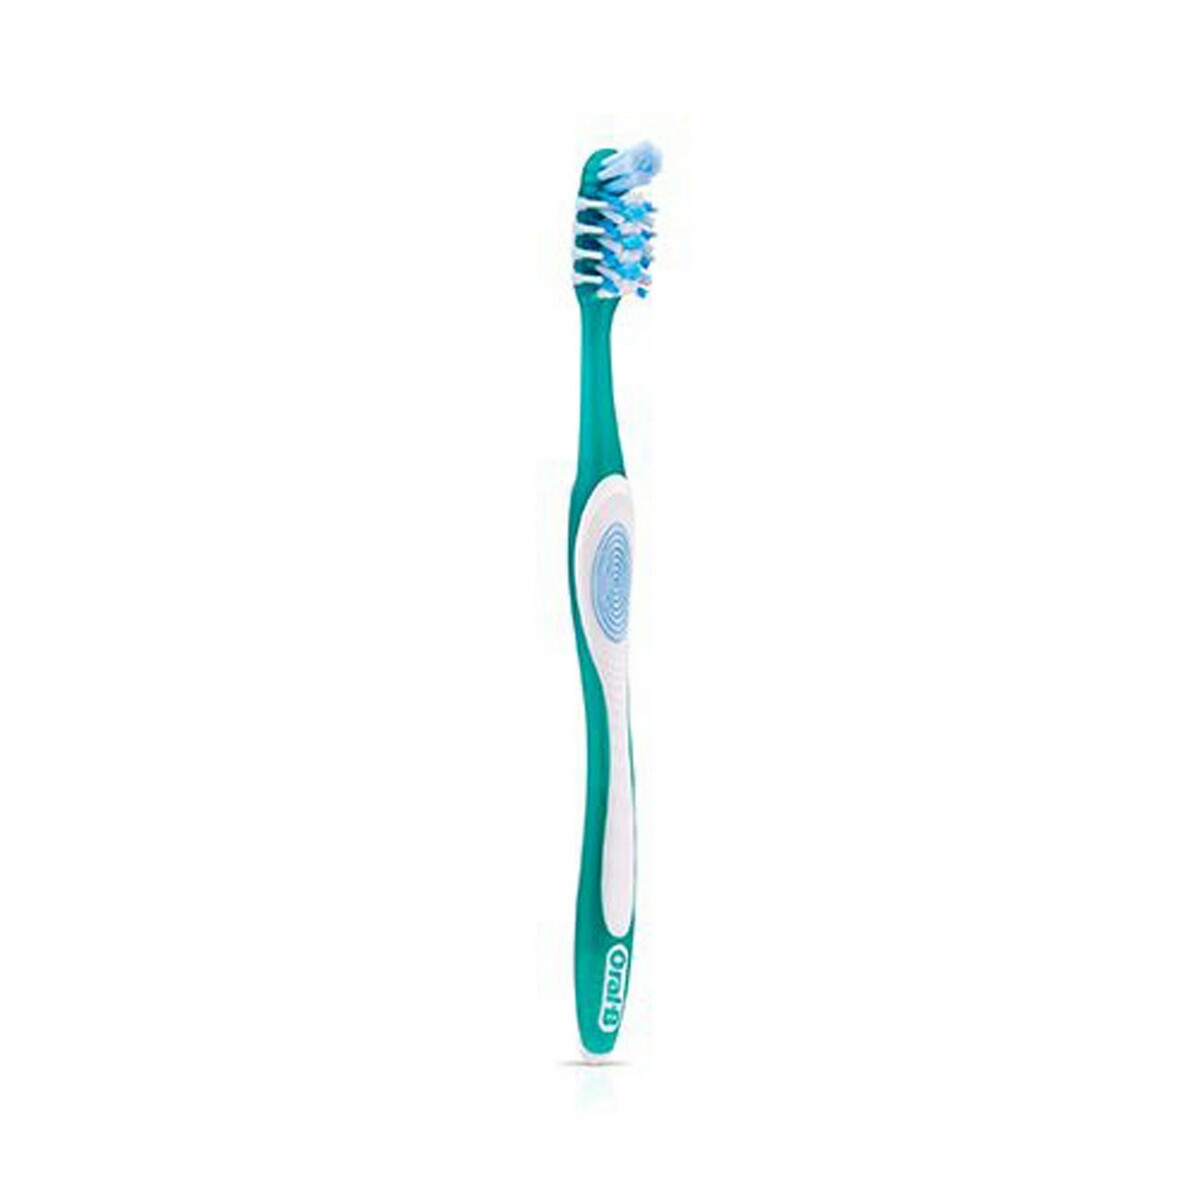 Oral-B Toothbrush Pro-Health Gum Care Medium 1's Assorted Colours